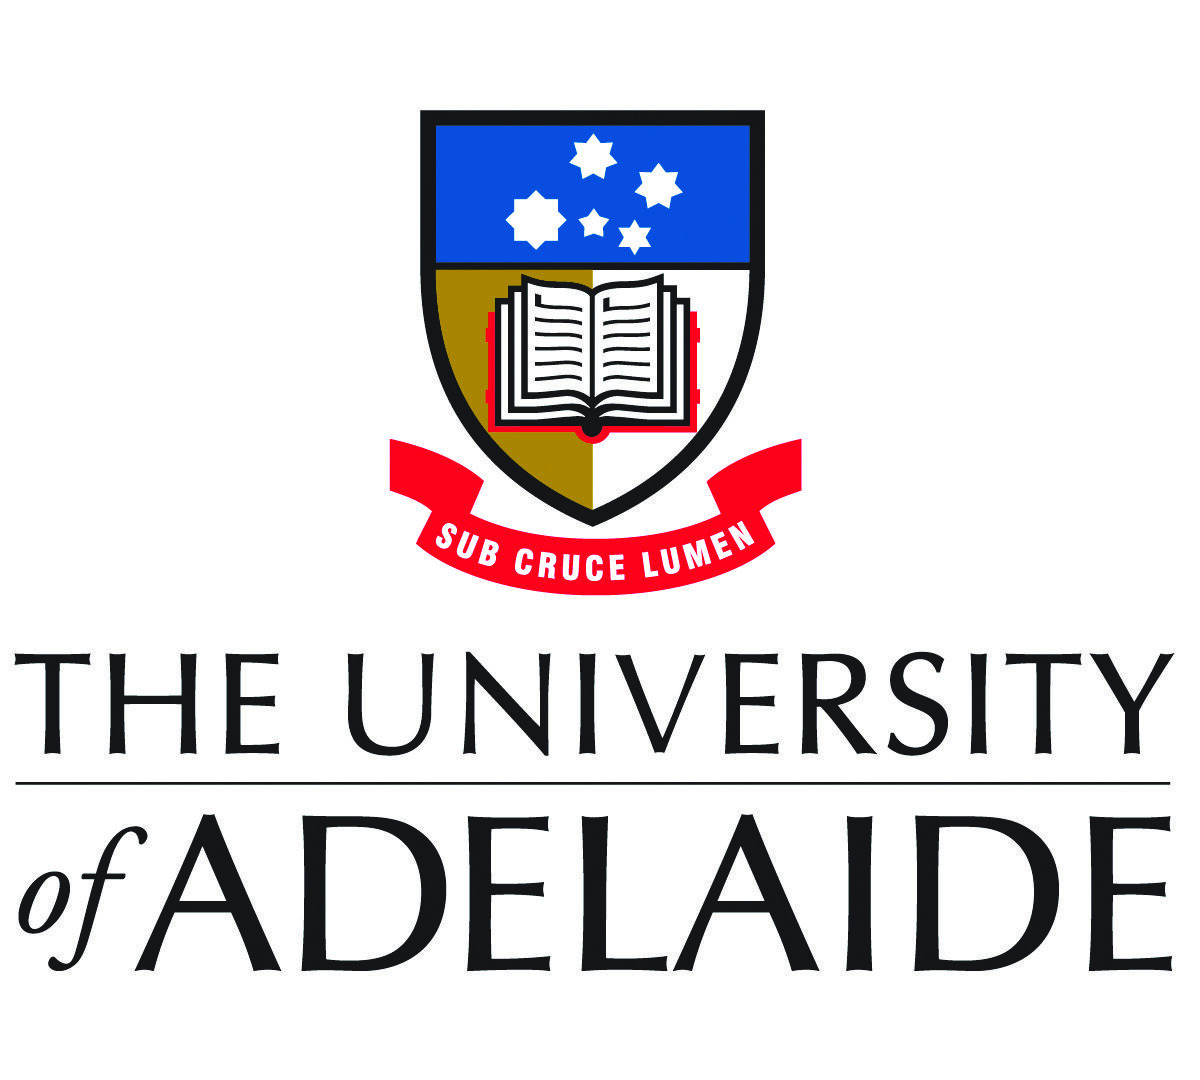 University-of-Adelaide